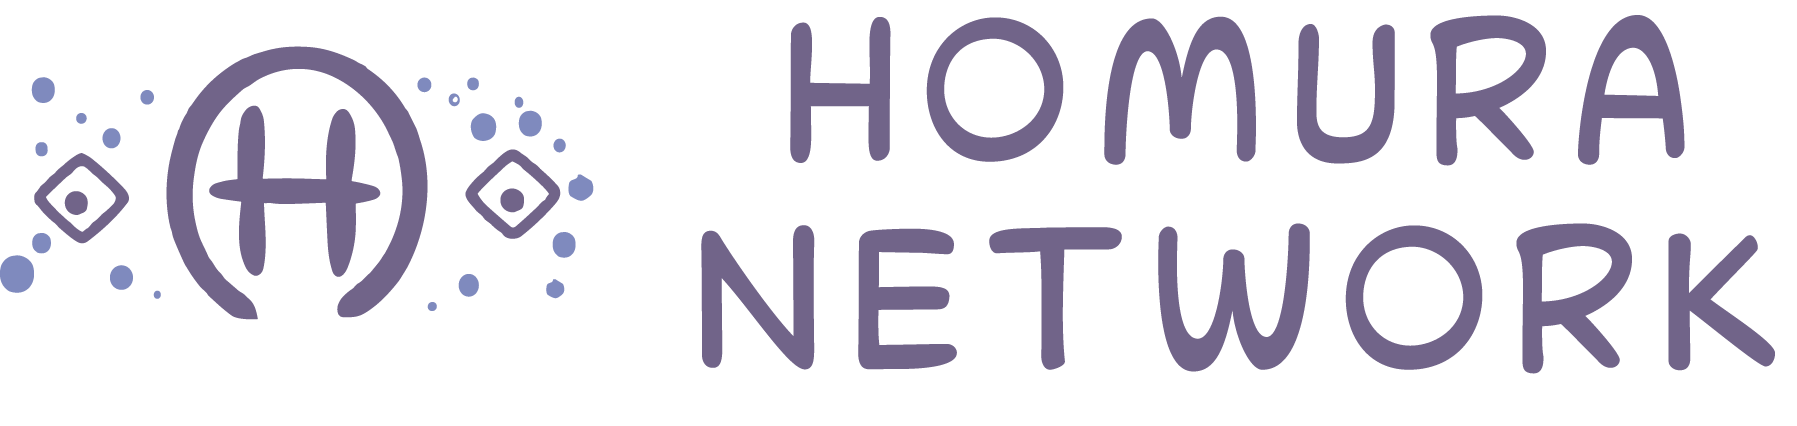 Homura Network Service Status